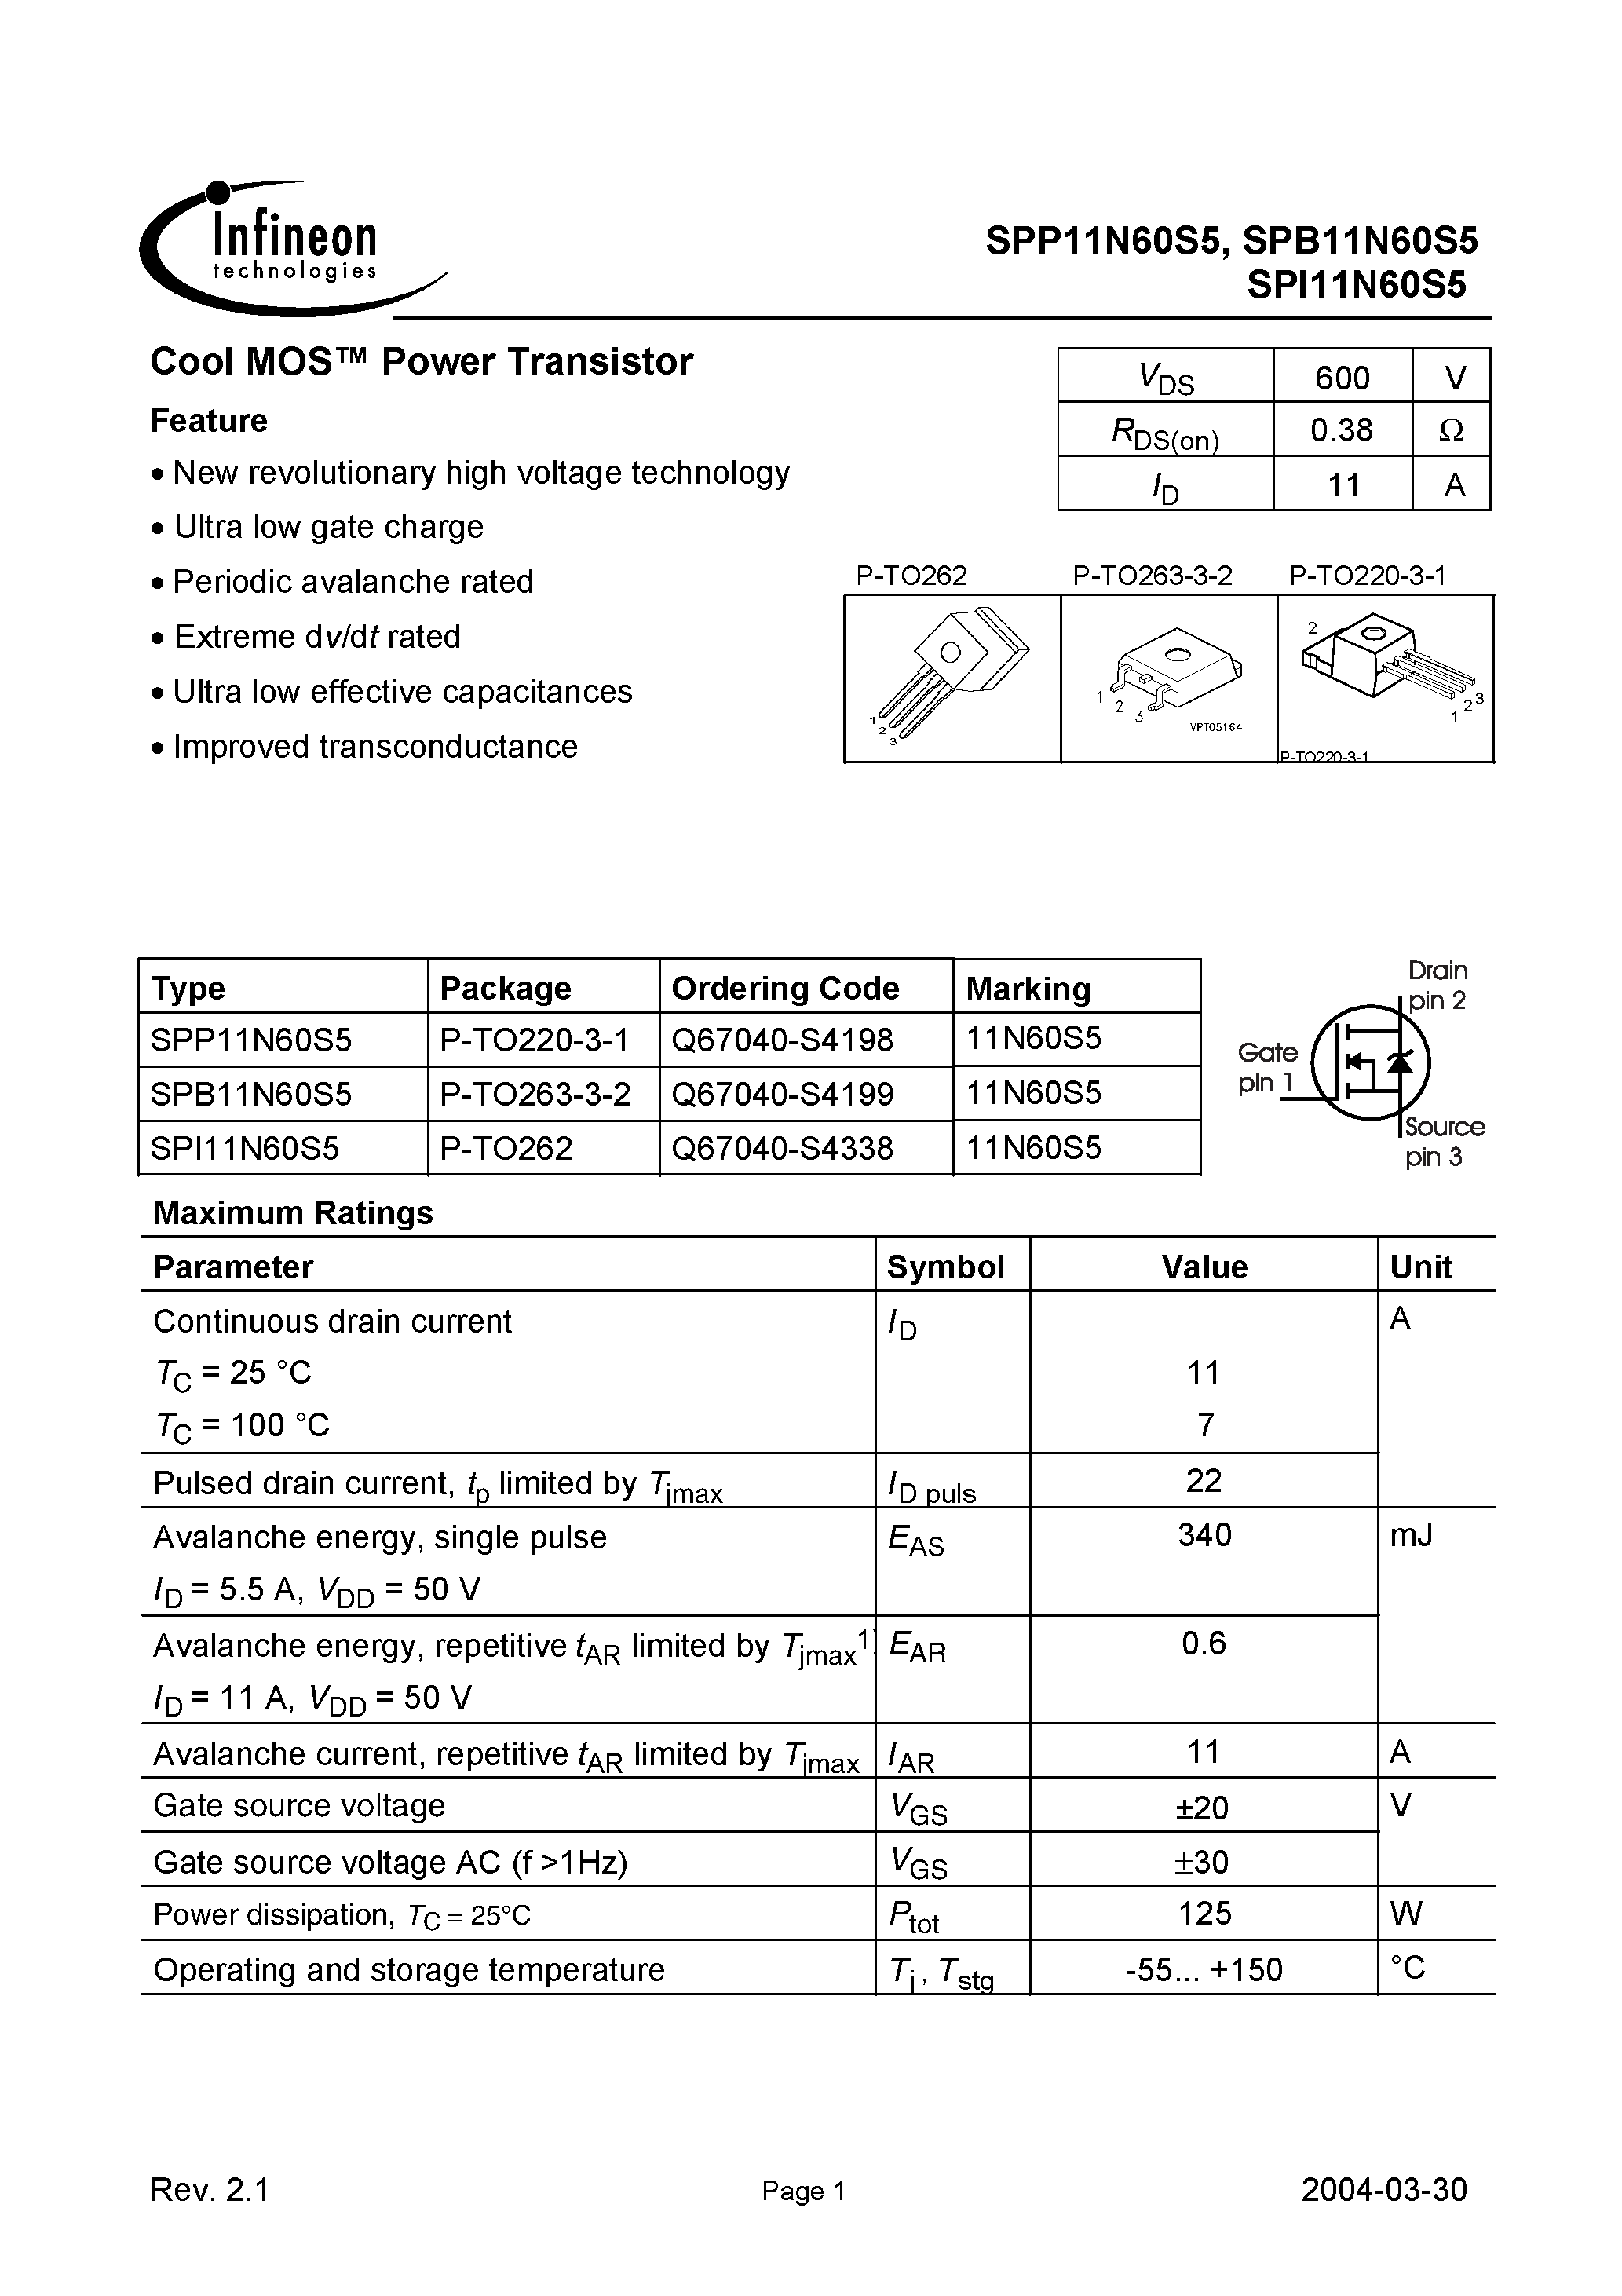 Datasheet SPI11N60S5 - Cool MOS Power Transistor page 1